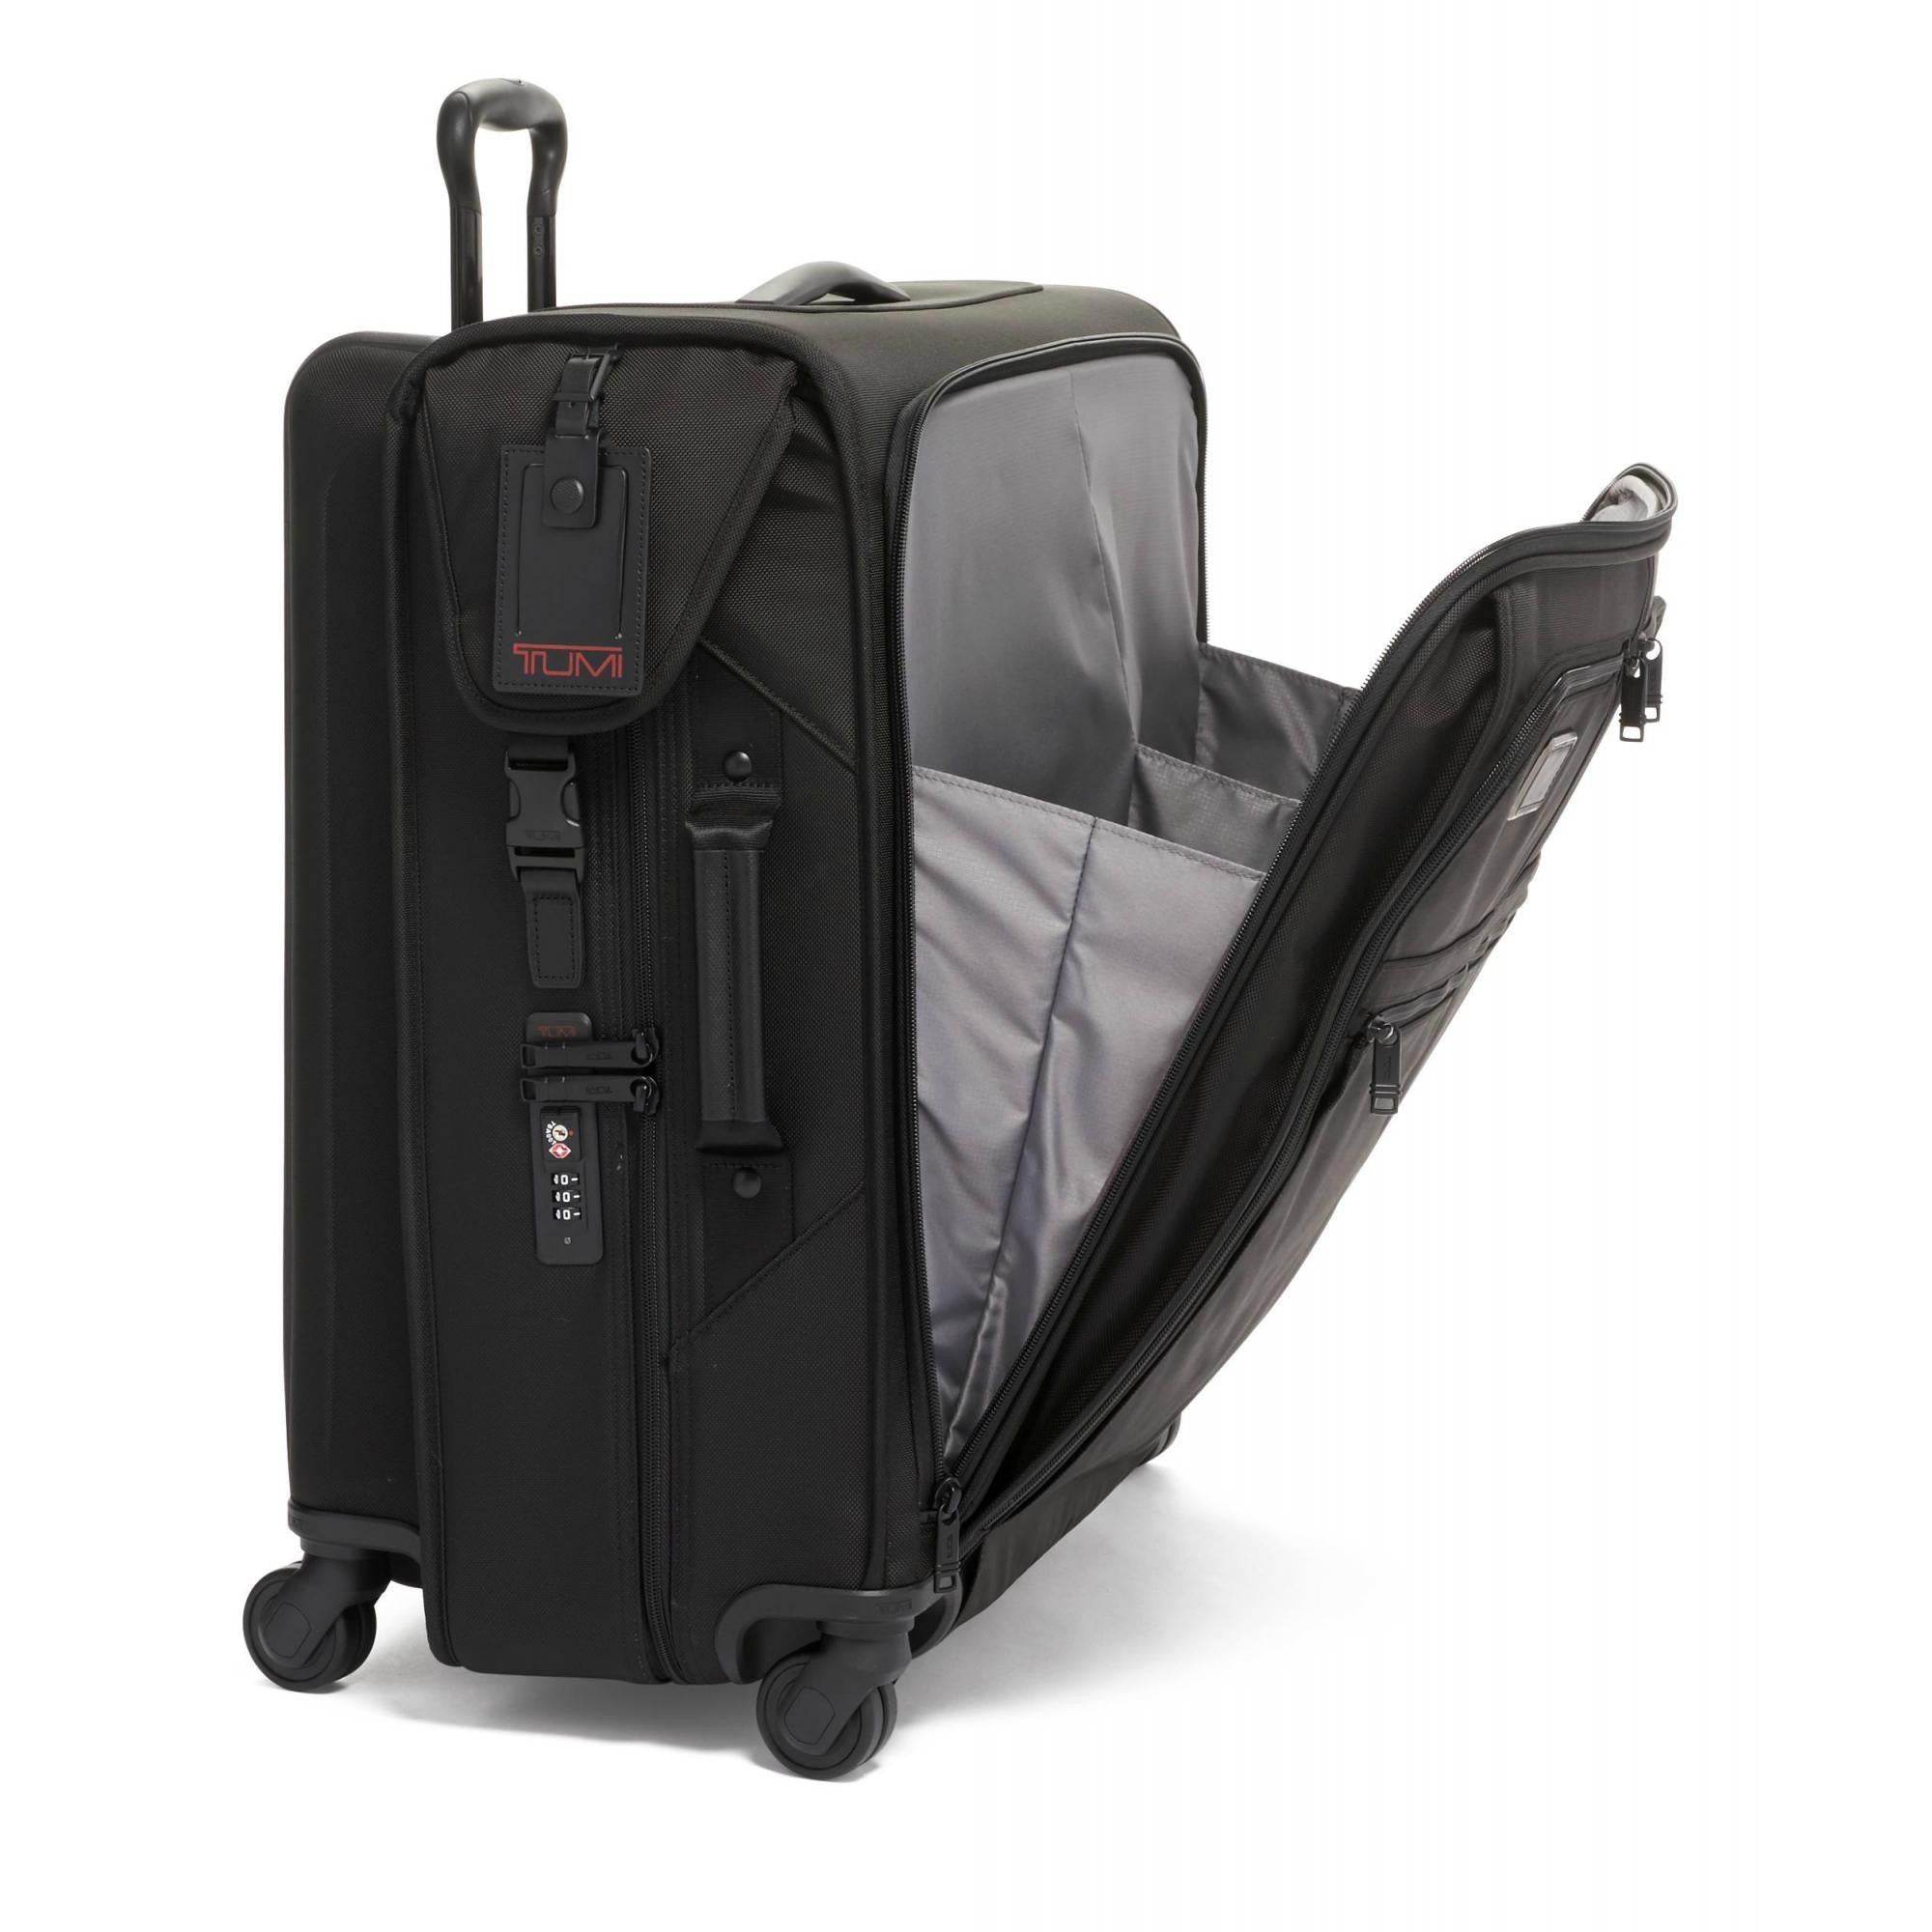 TUMI Alpha 3 Extended Trip 4 Wheel Bag Luggage Pros